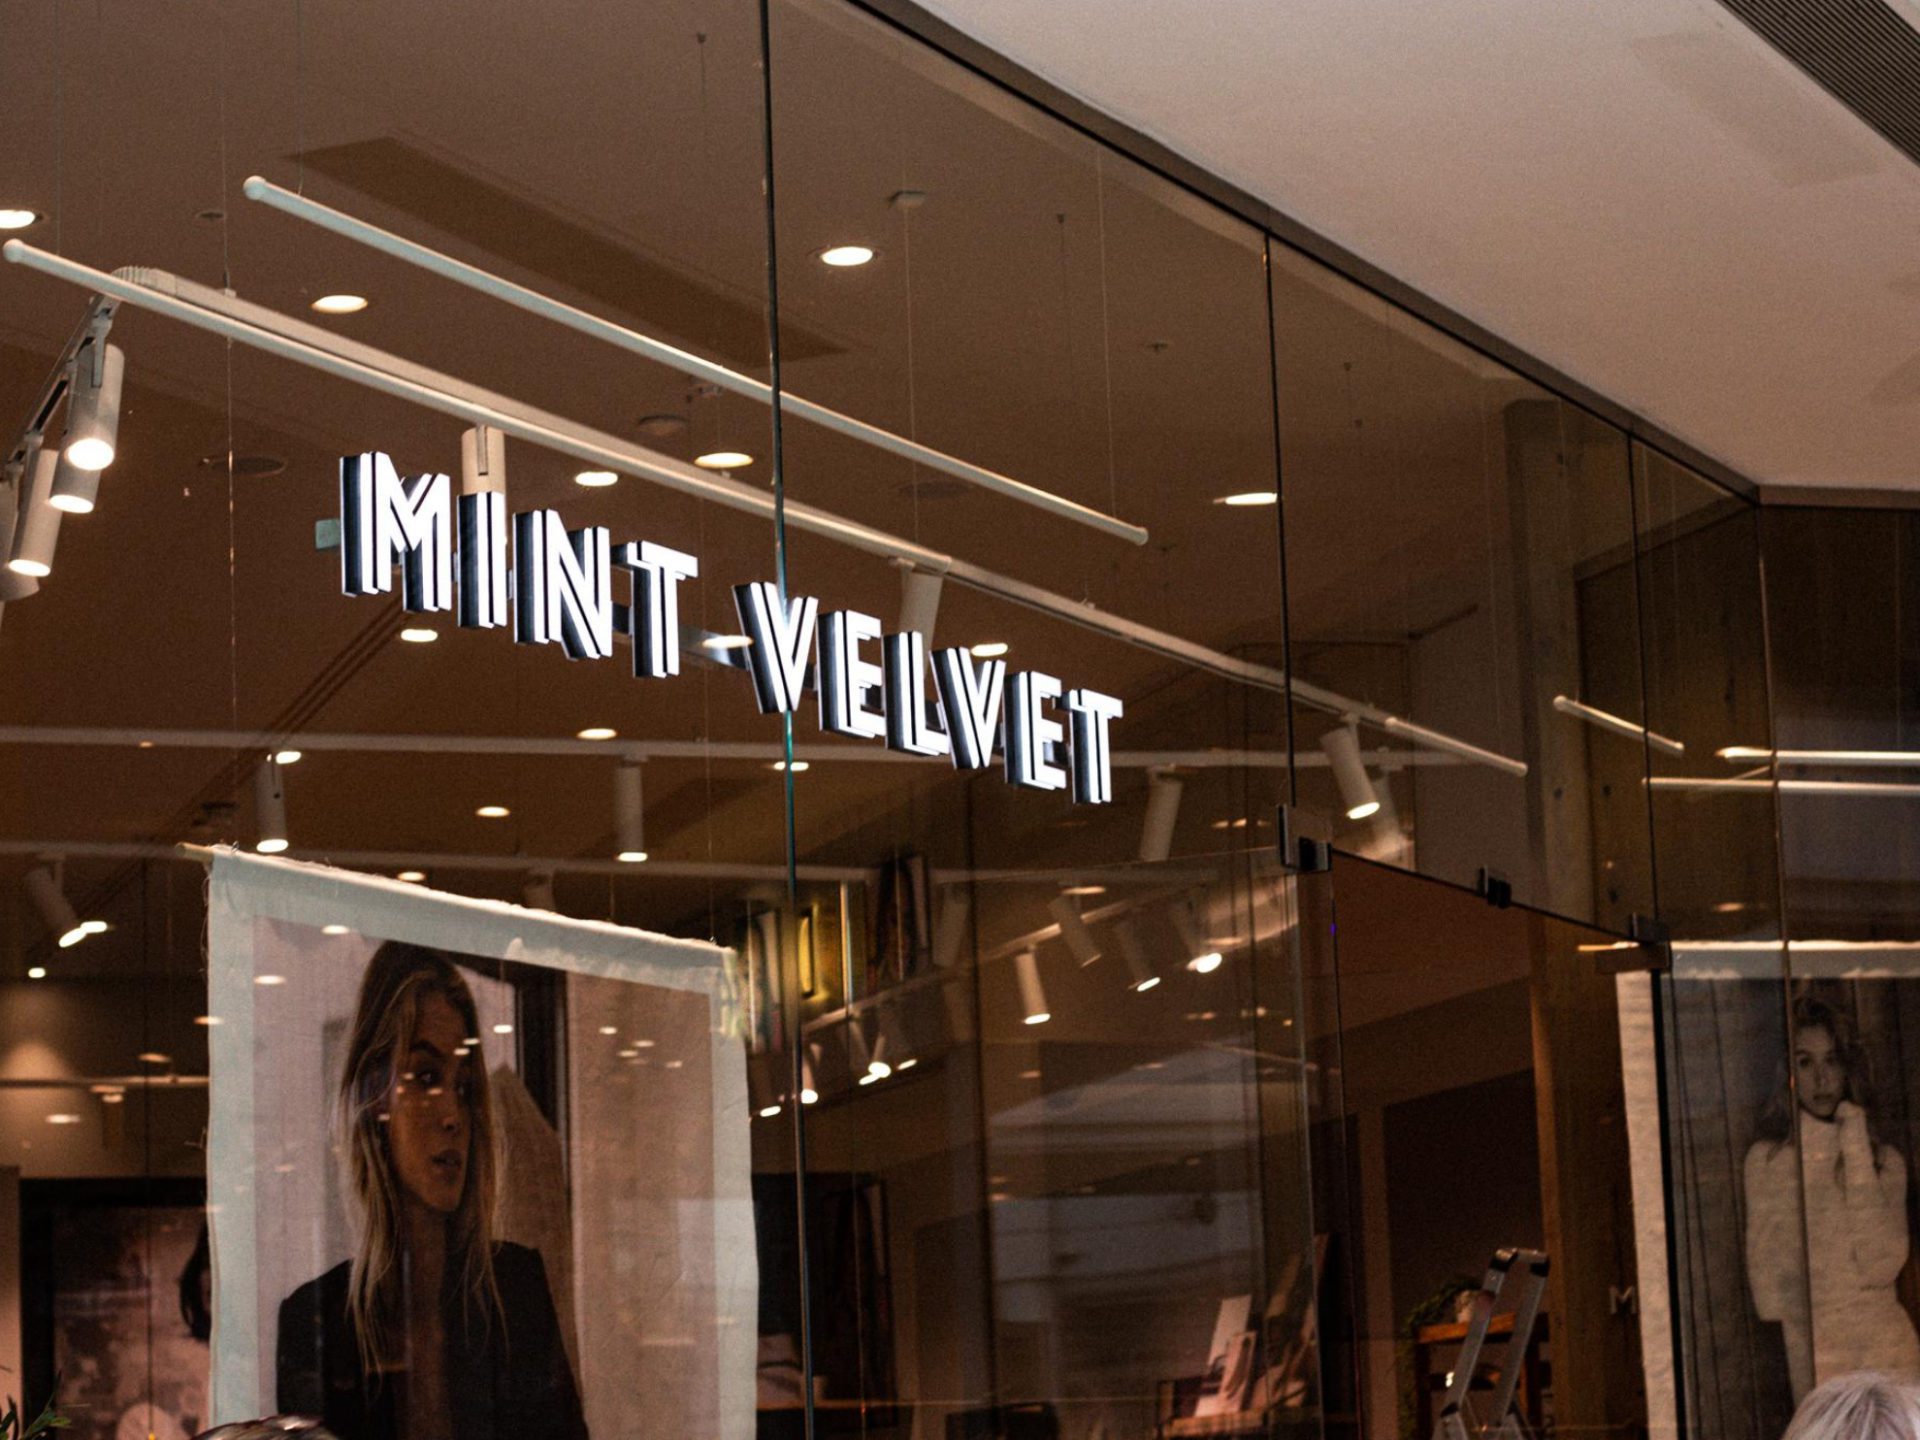 MINT VELVET - Introducing our latest boutique a gorgeous new